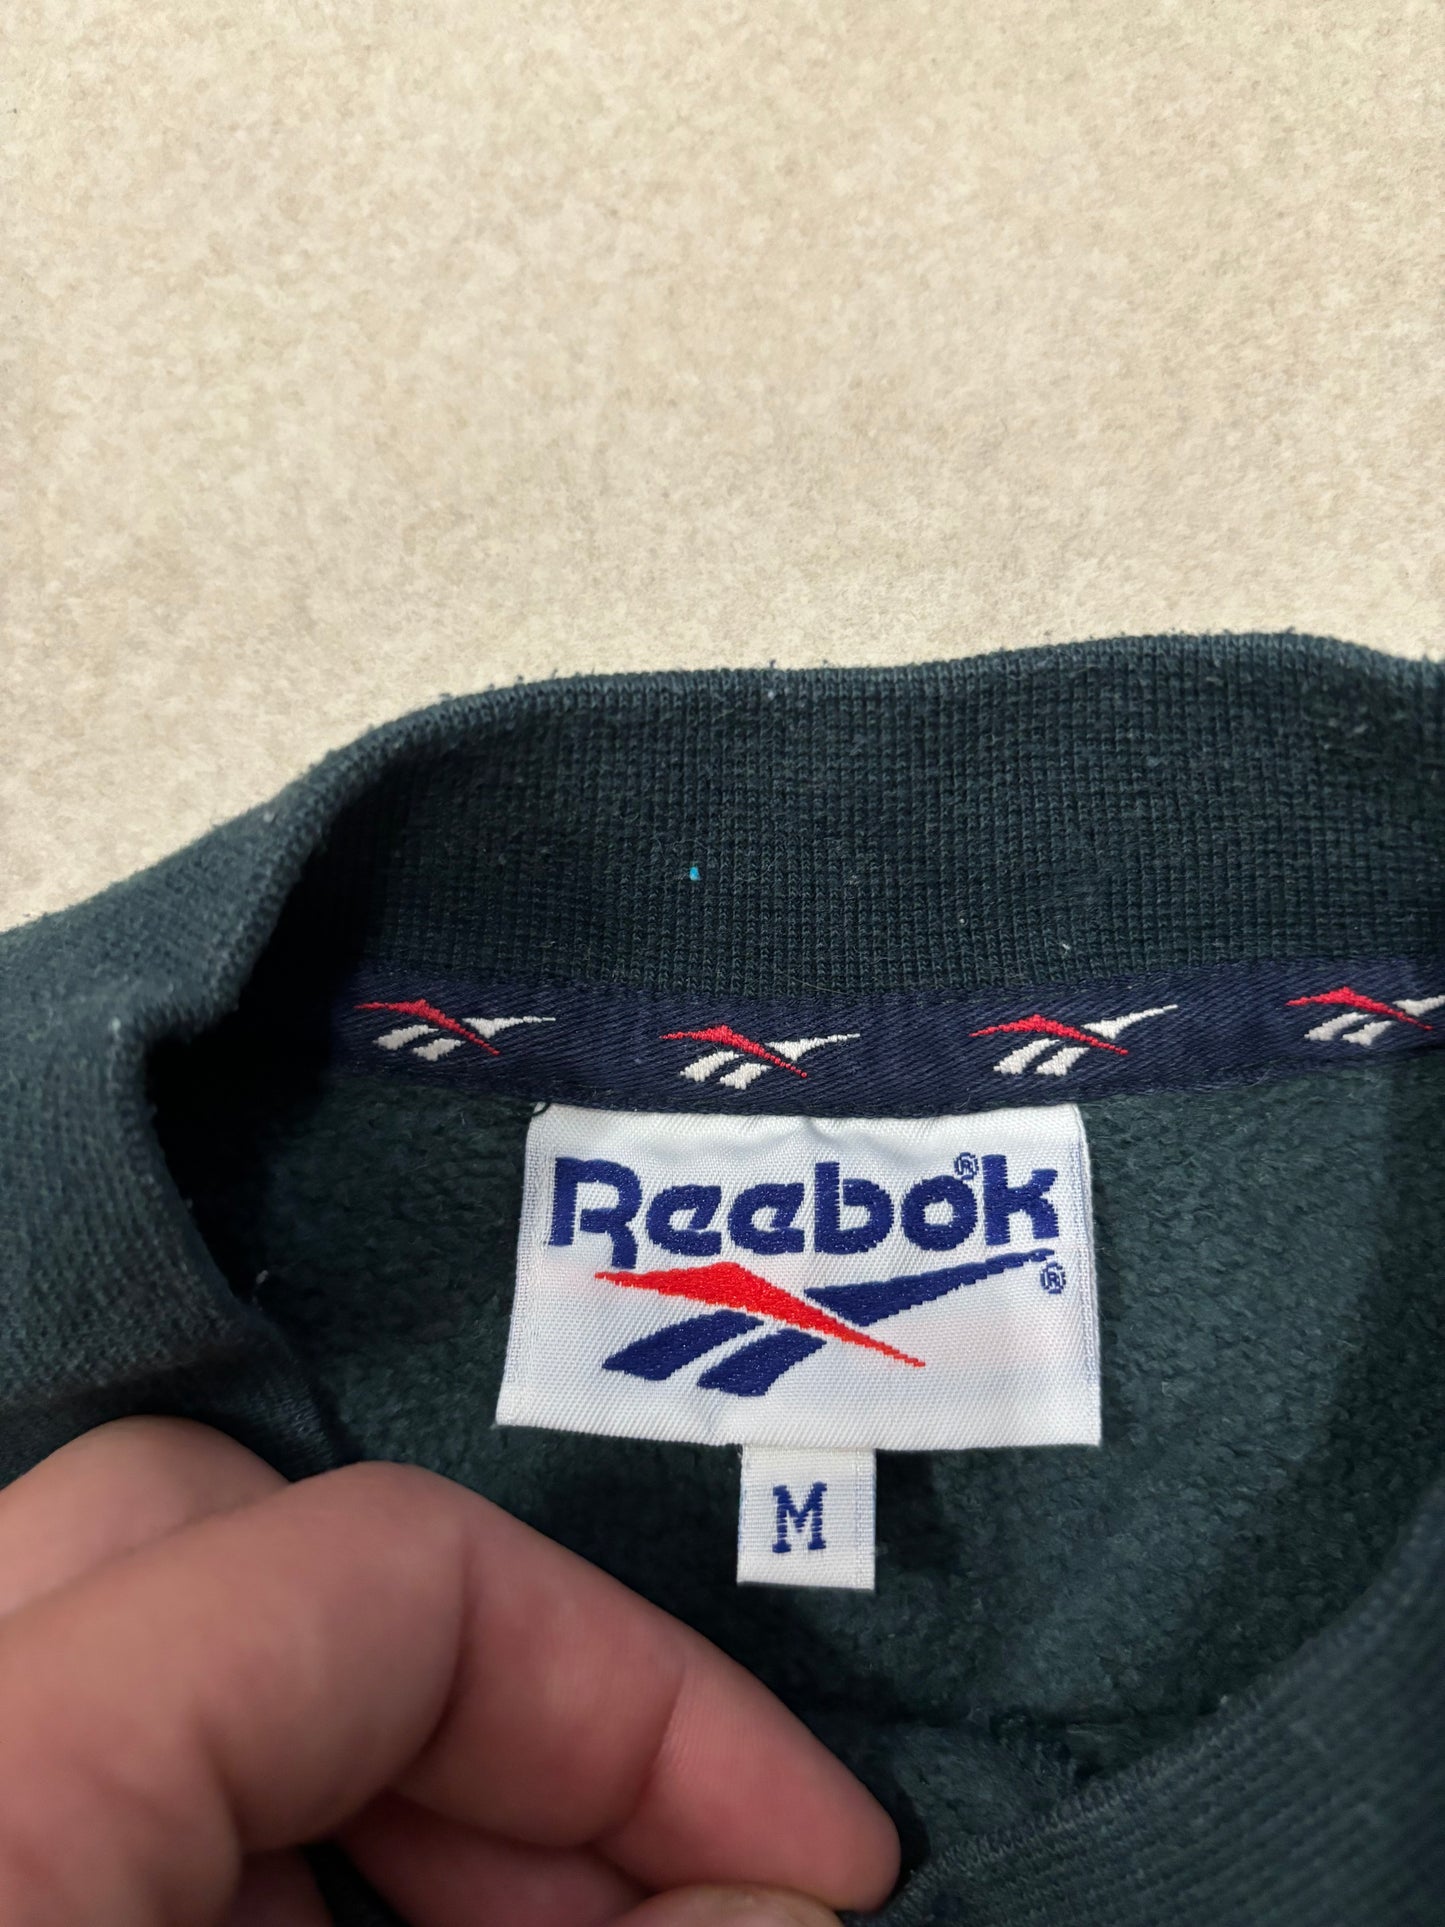 Reebok 00s Vintage Sweatshirt - S